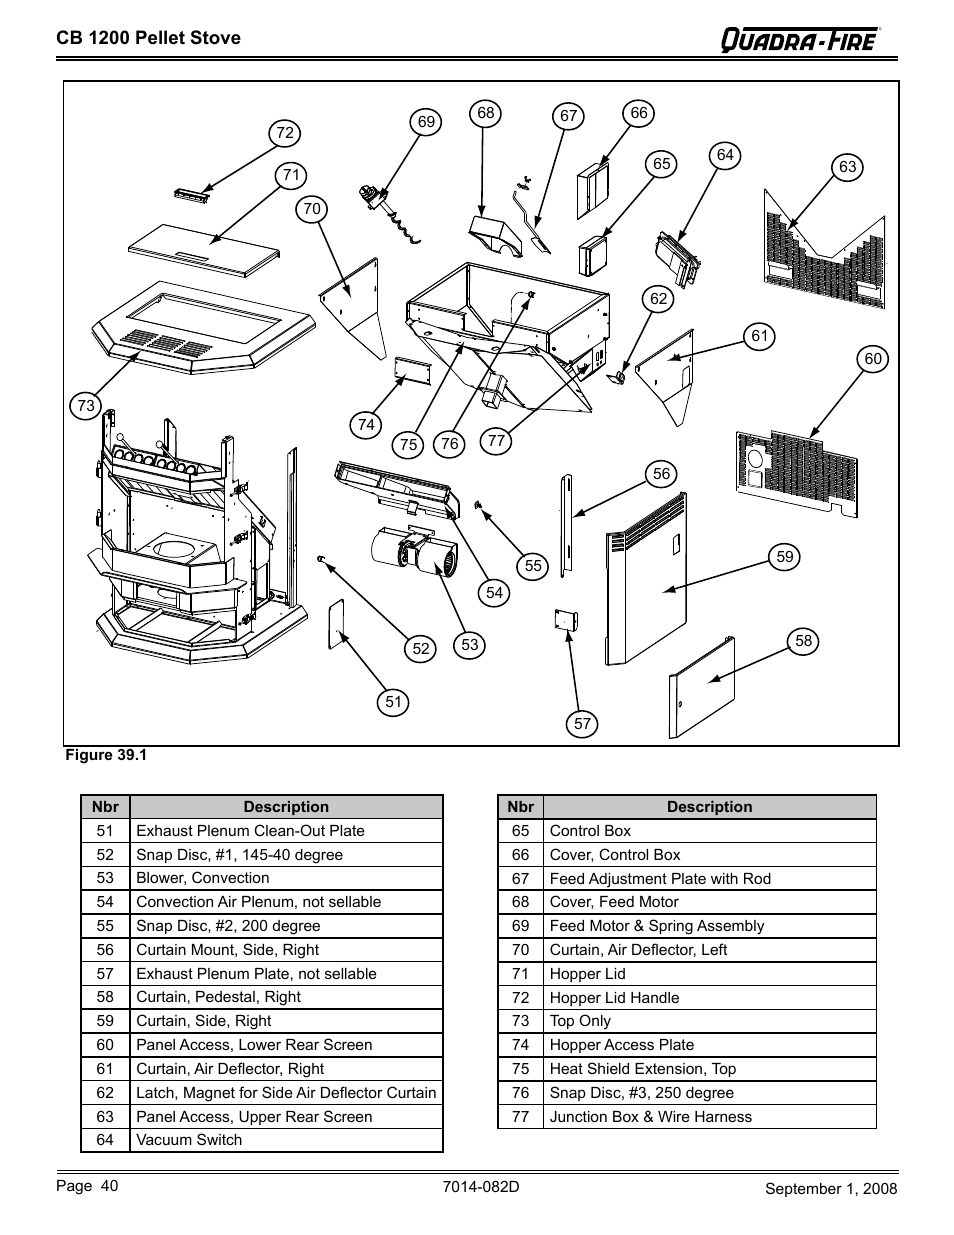 Cb 1200 pellet stove | Quadra-Fire CB1200-B User Manual | Page 40 / 48